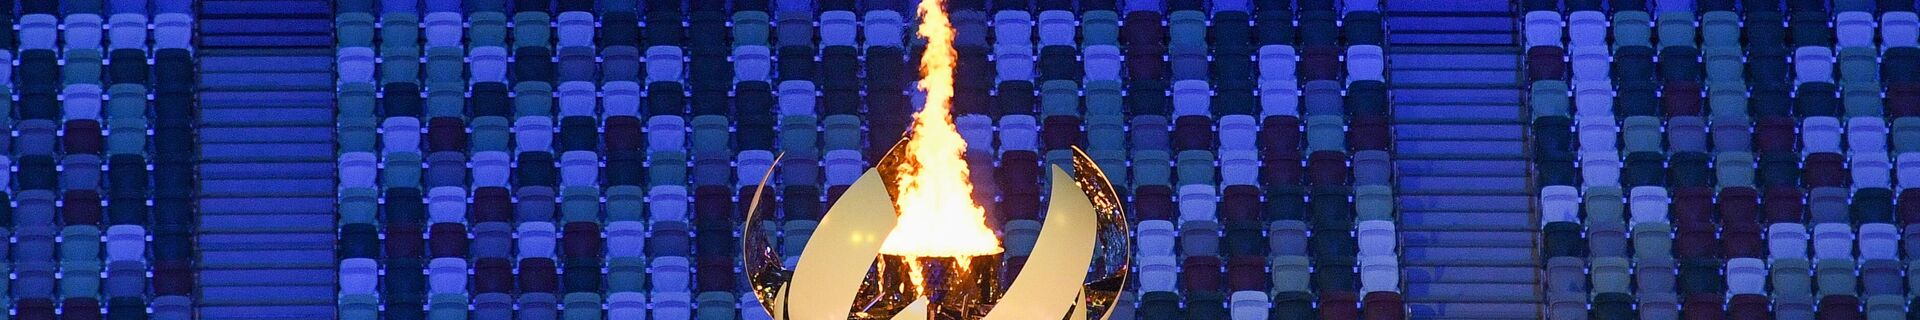 Церемония открытия XXXII летних Олимпийских игр - Sputnik Узбекистан, 1920, 20.07.2021